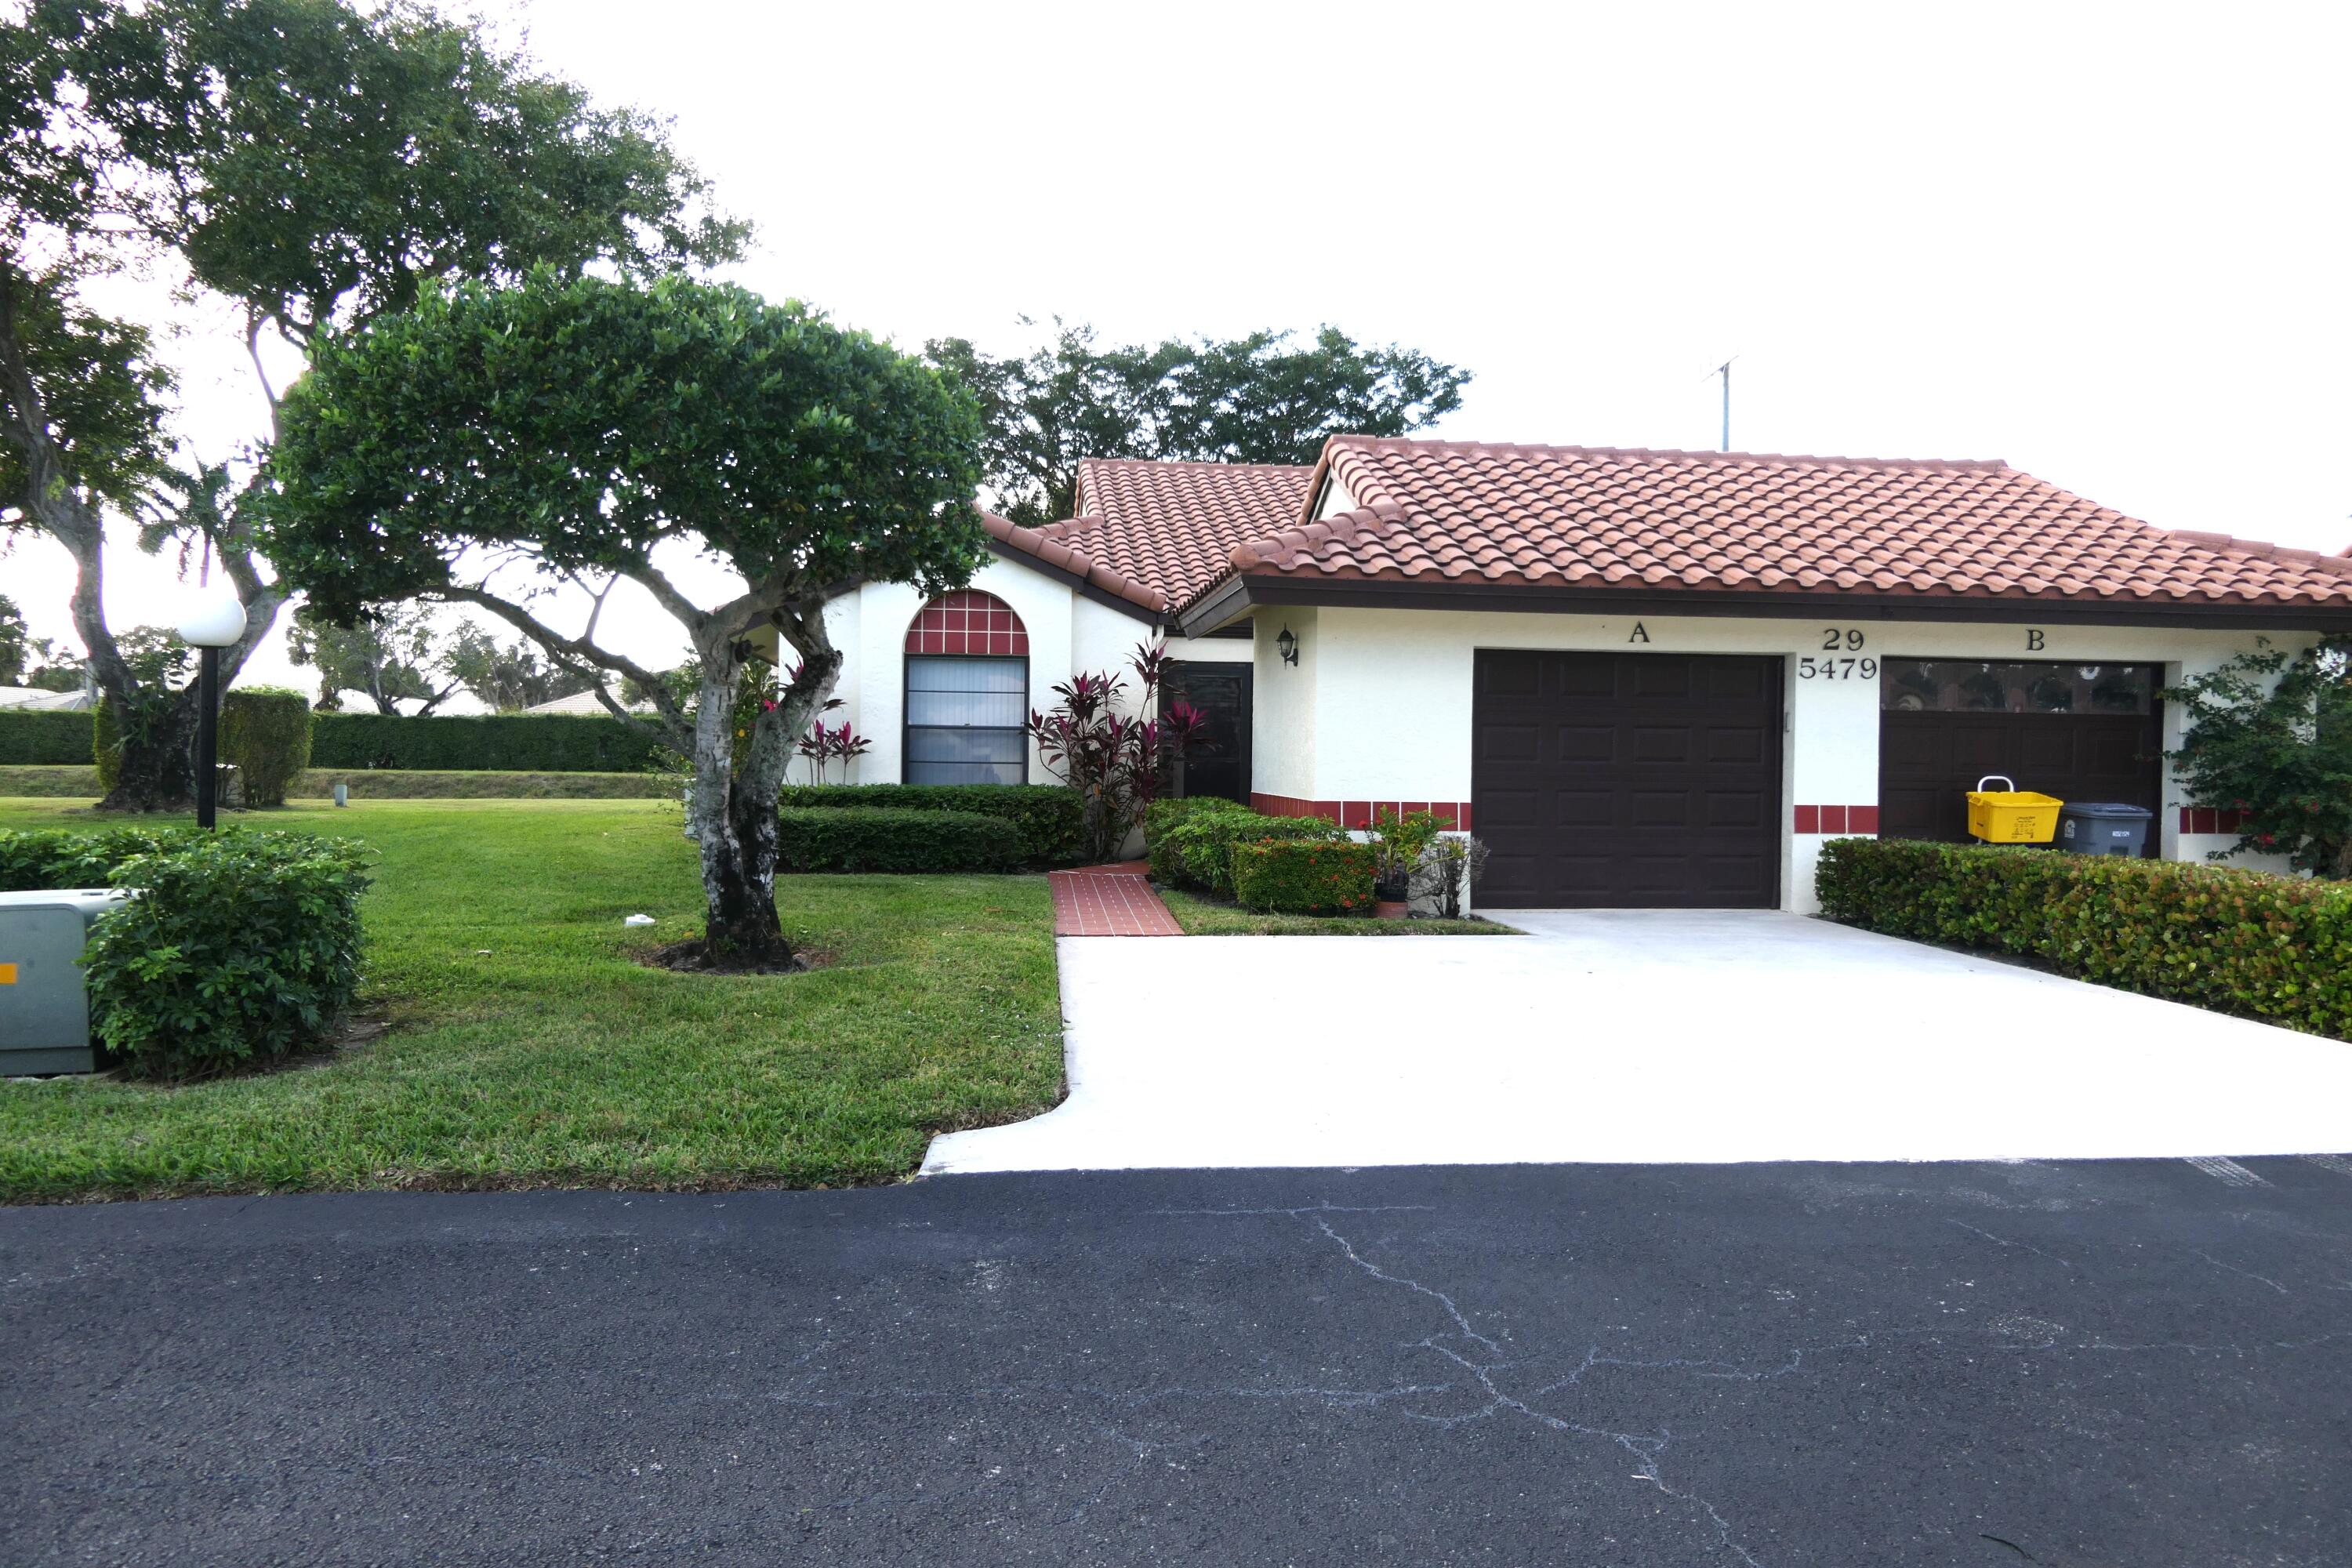 Property for Sale at 5479 Palm Springs Lane A, Boynton Beach, Palm Beach County, Florida - Bedrooms: 3 
Bathrooms: 2  - $324,000